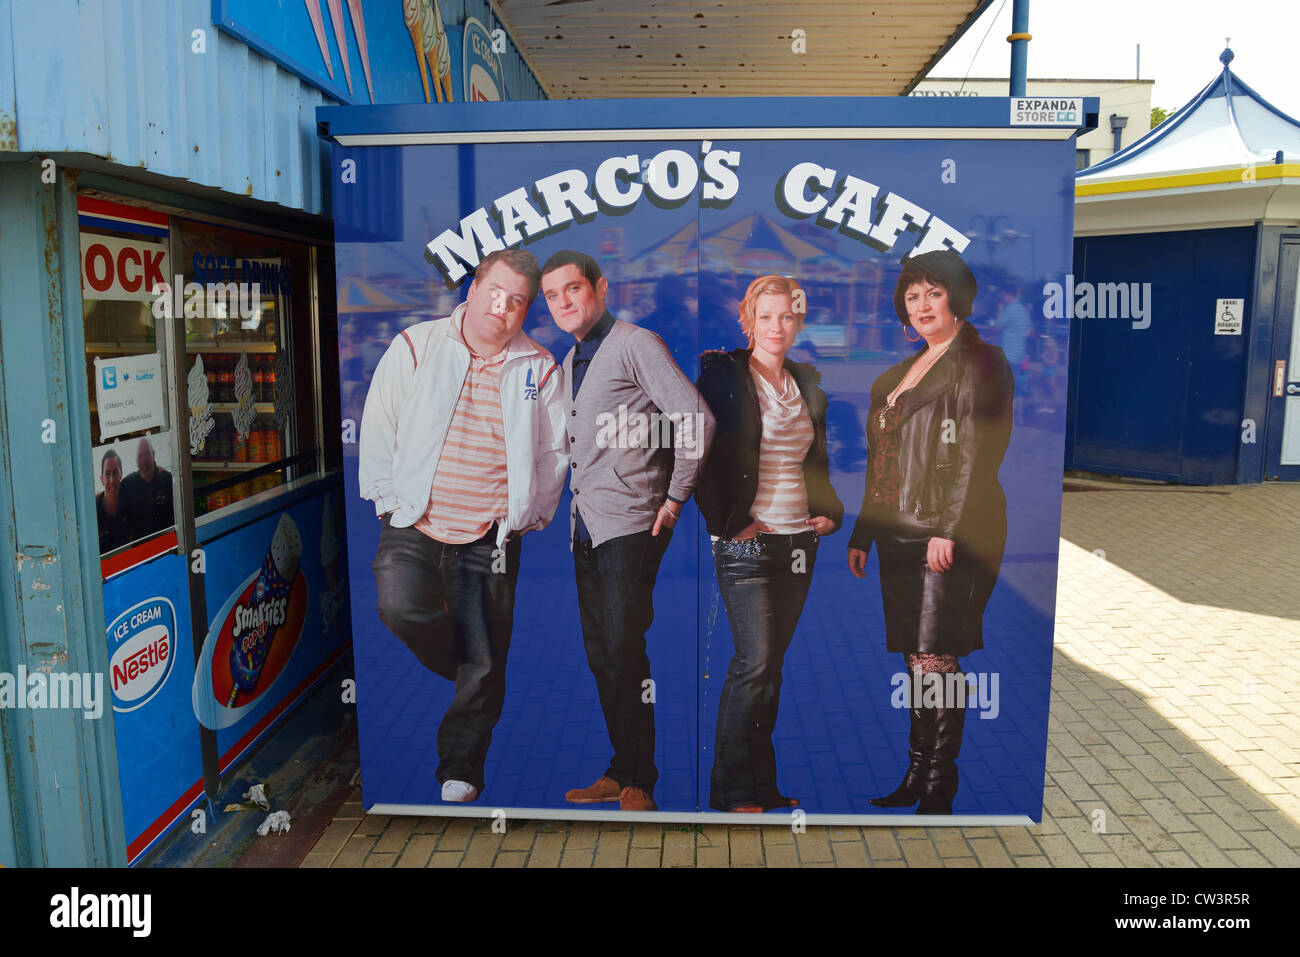 Marco's Cafe sign (vorgestellt in 'Gavin & Stacey' sitcom), Barry Island, Barry, Vale of Glamorgan, Wales (Cymru), Großbritannien Stockfoto